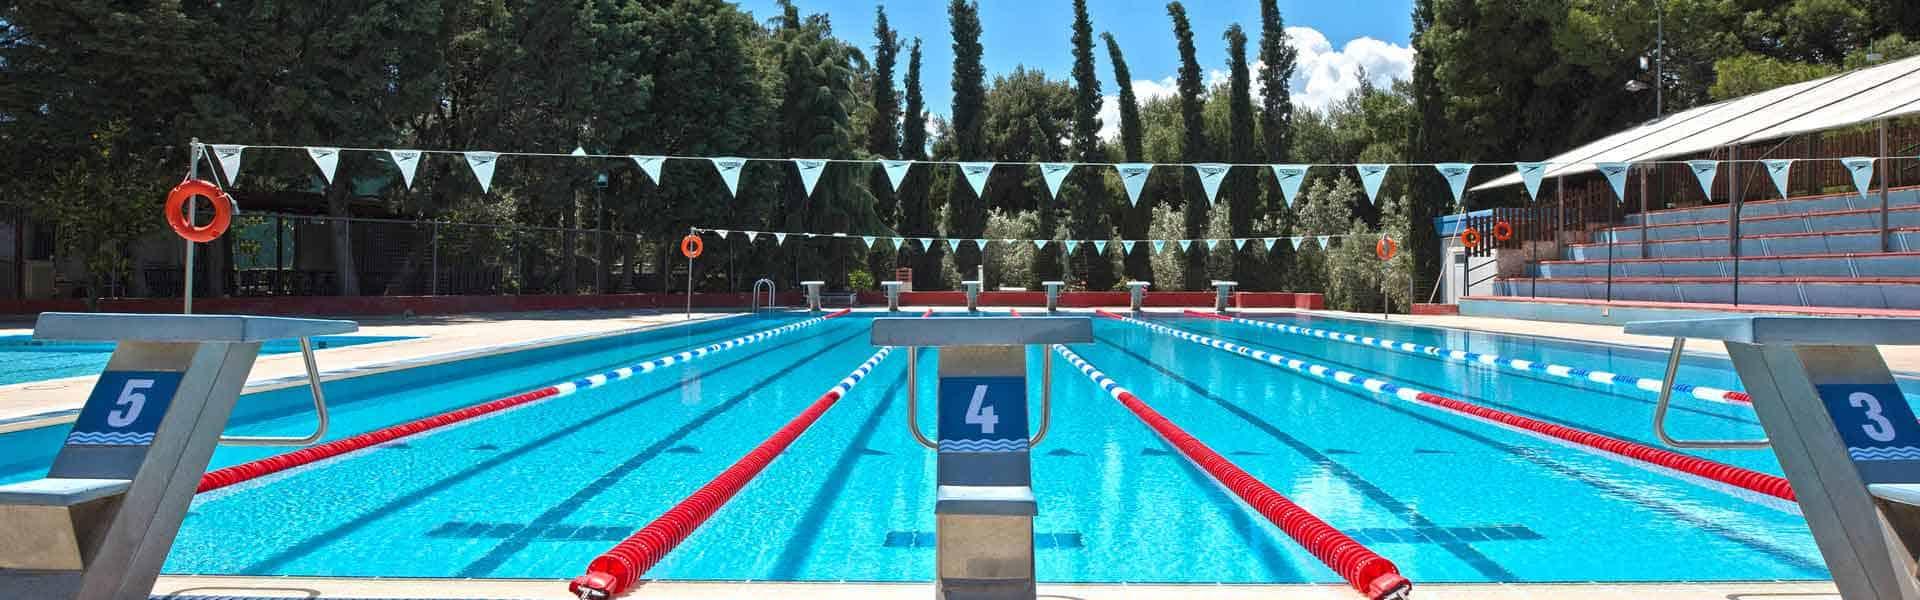 Sportcamp swimming pool